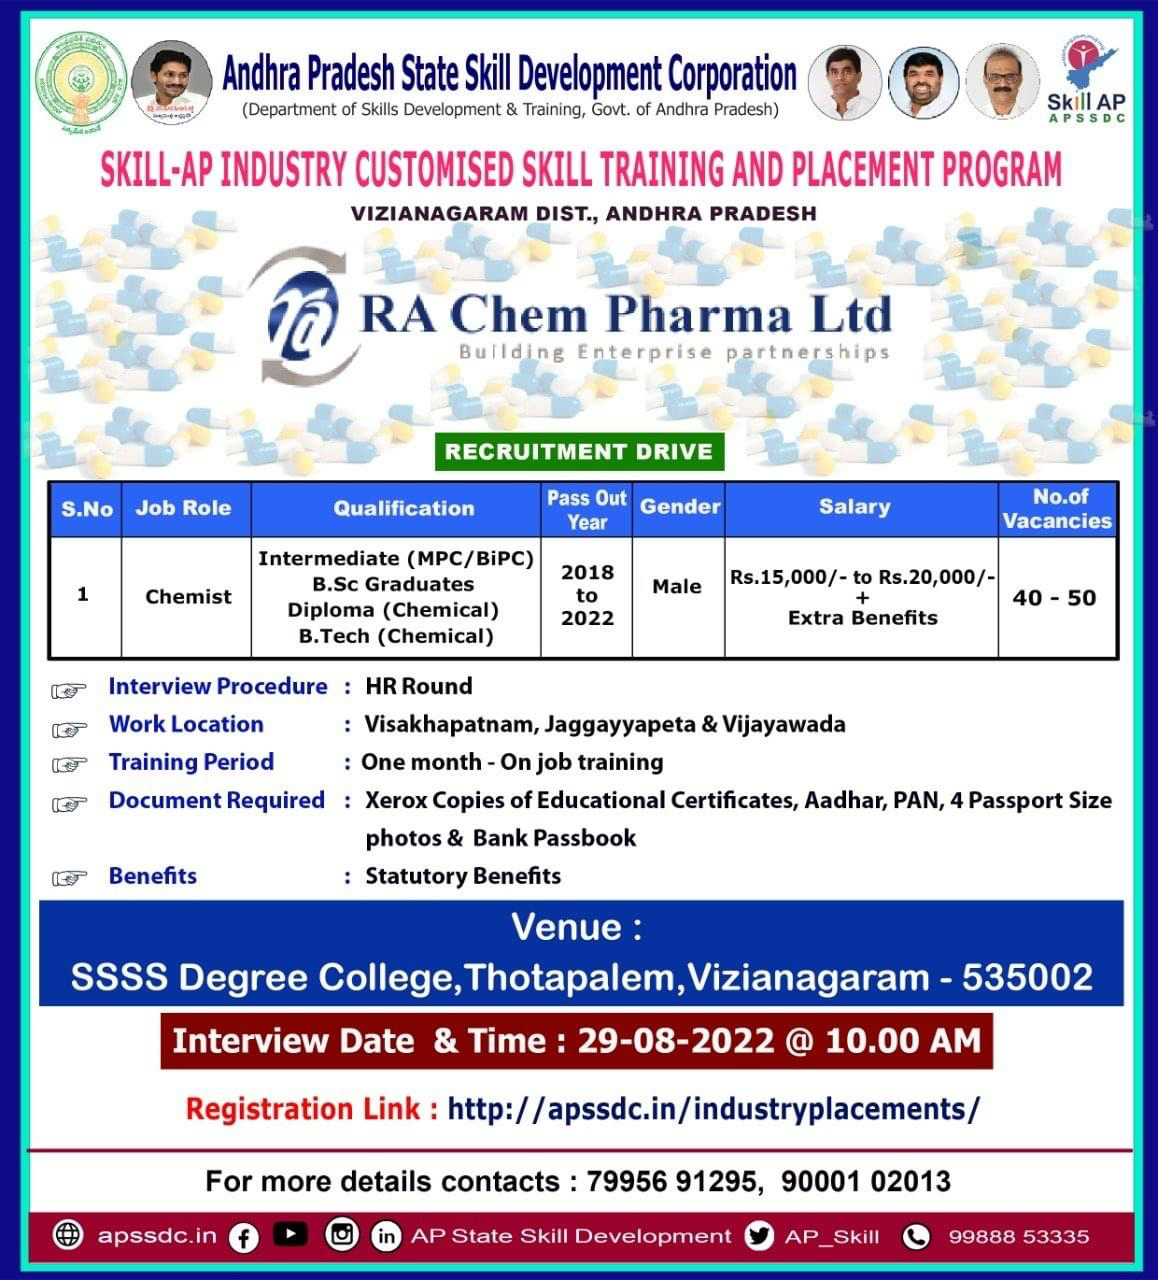 APSSDC Recruitment 2022 at RA Chem Pharma Ltd - Chemist Jobs